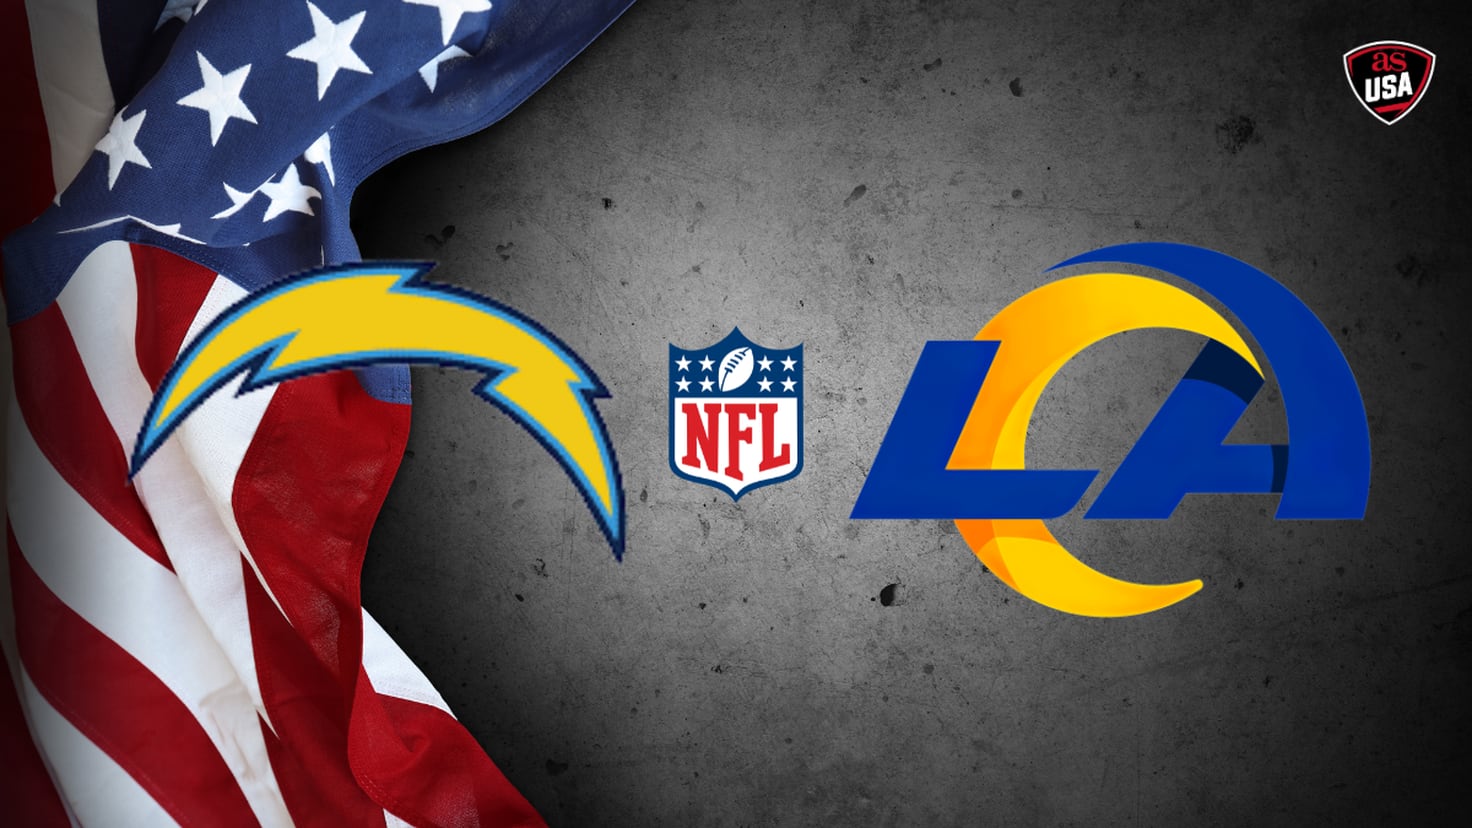 Rams vs. Chargers: NFL preseason game live streaming options, kick-off time